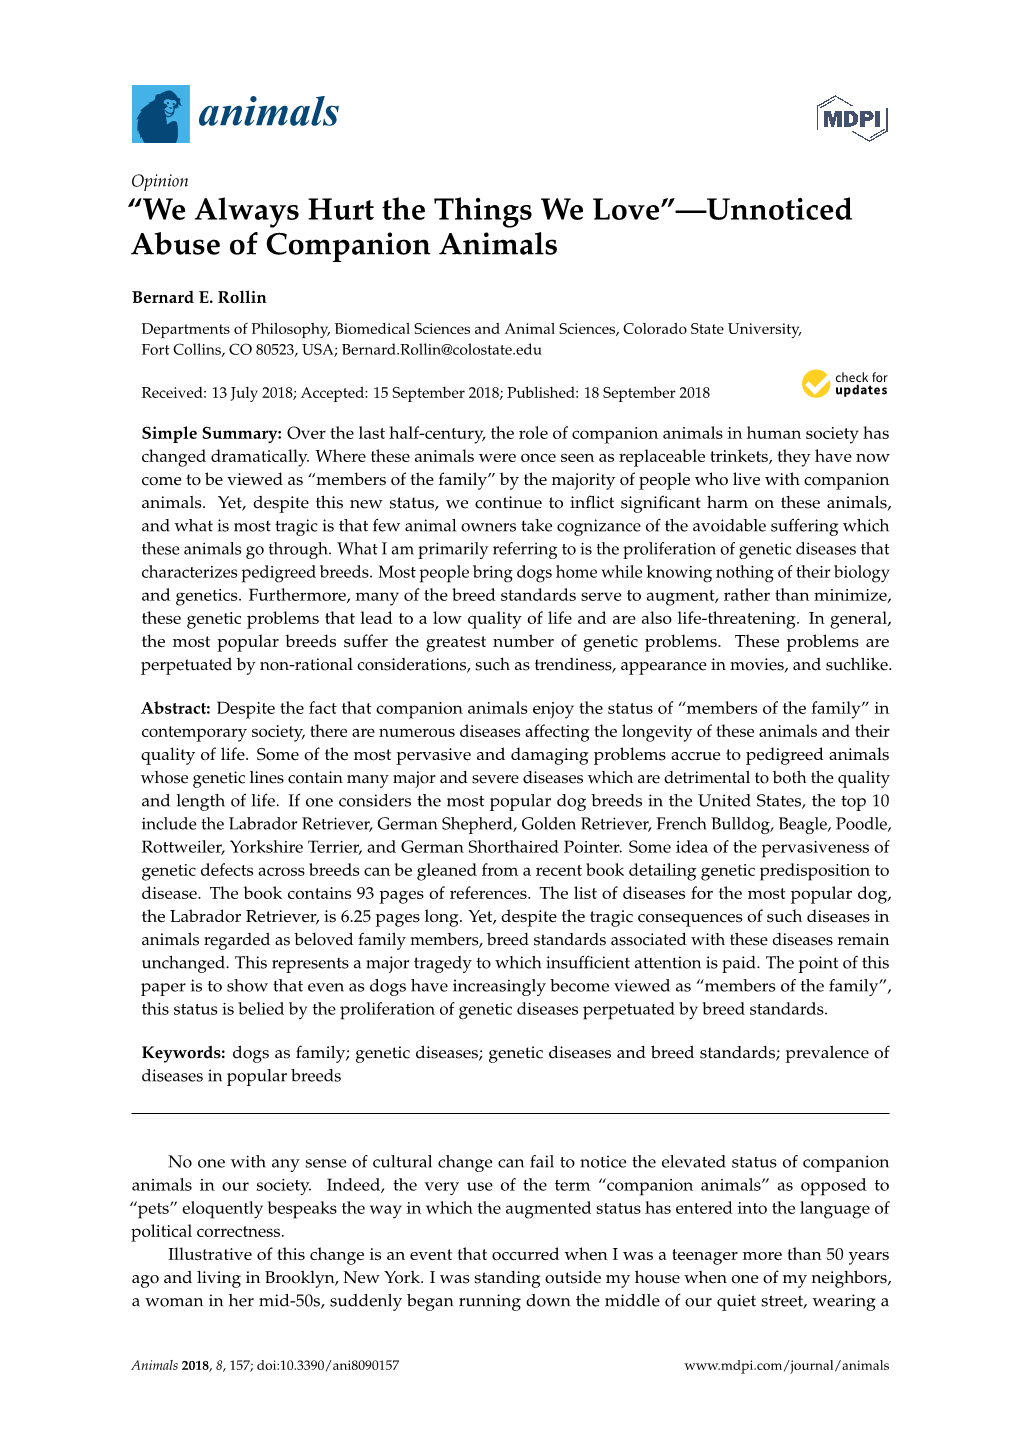 Unnoticed Abuse of Companion Animals